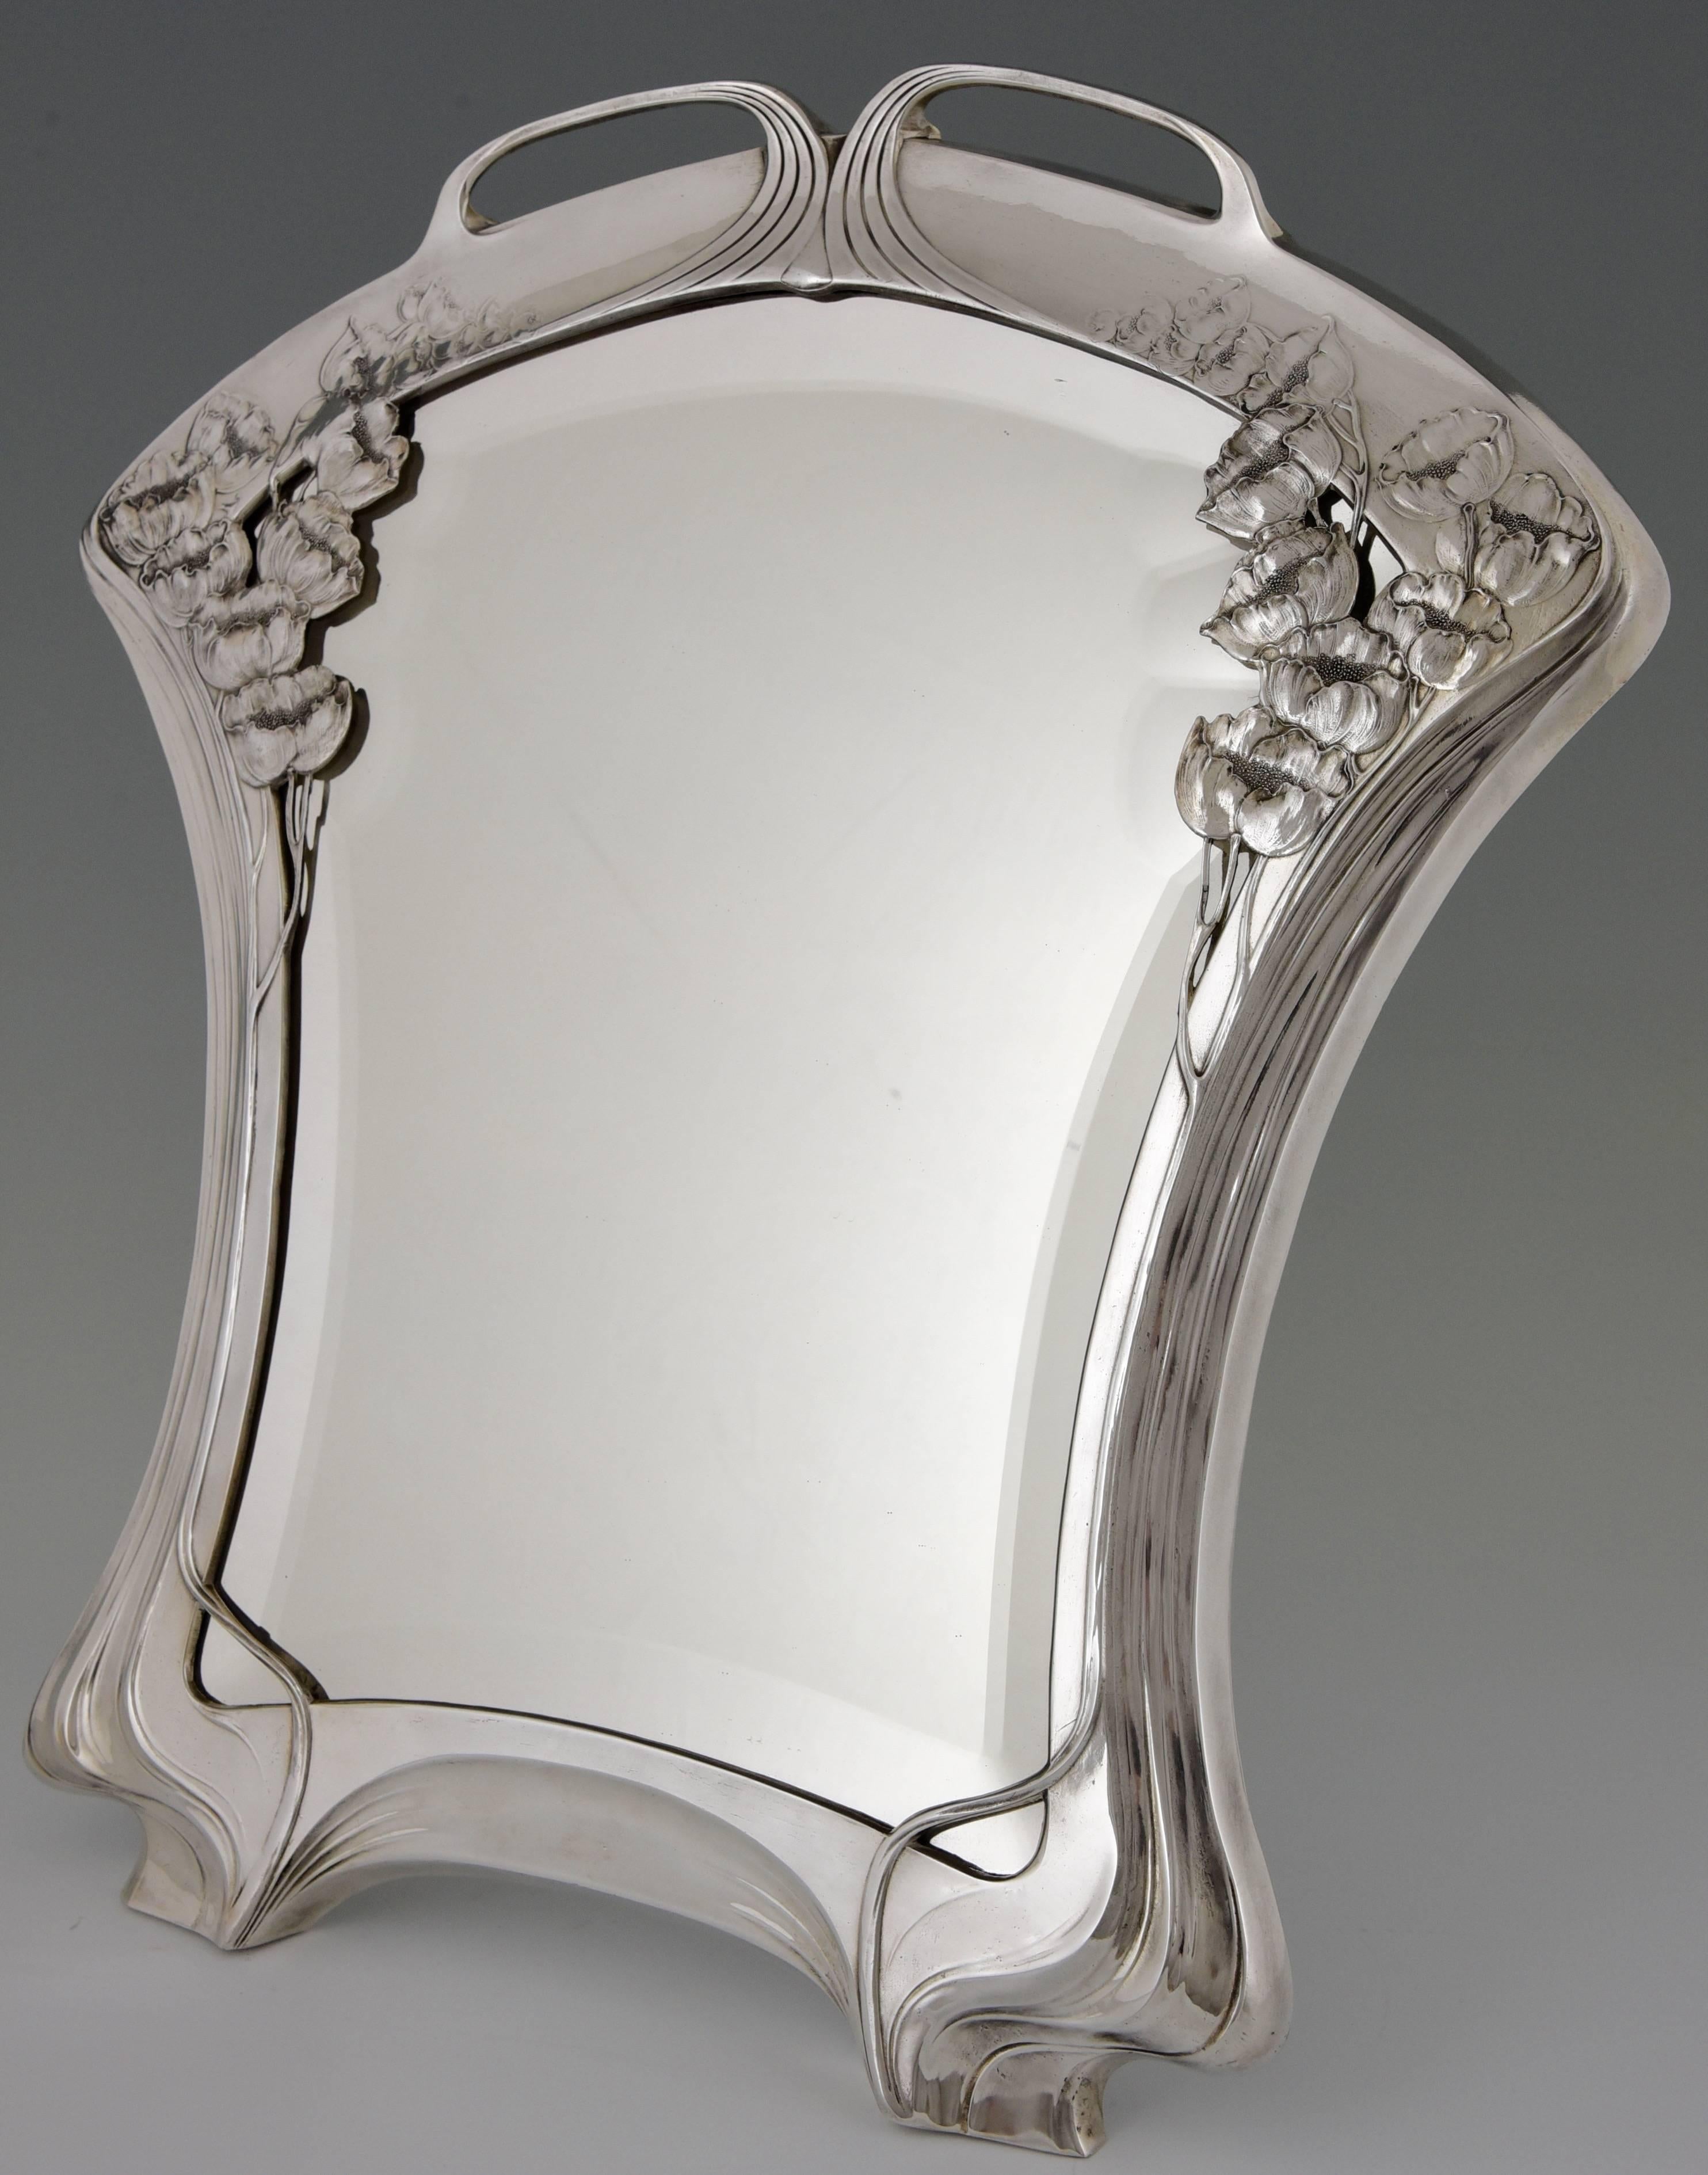 An Art Nouveau mirror with beveled edge “ORIVIT”
Stamped marks: ORIVIT, 2369
Date: 1904

This model is illustrated on page 97 of
Orivit, Zinn des Jugendstils aus Köln.